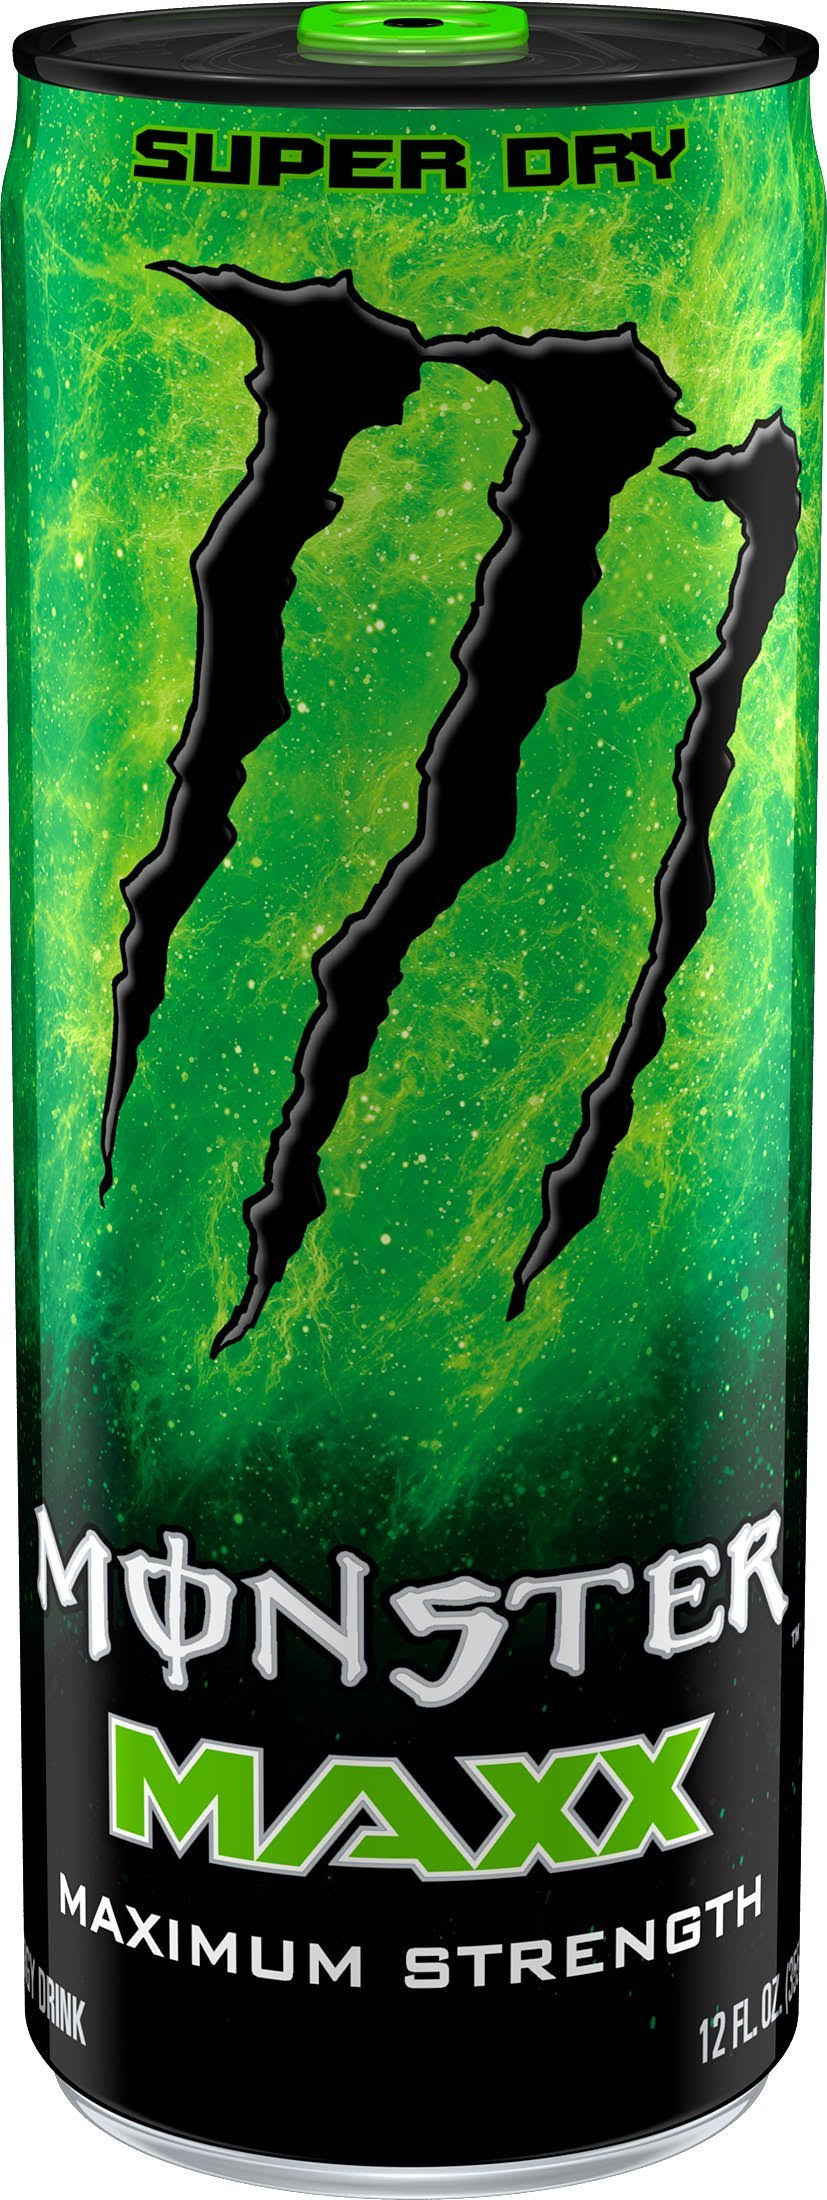 Monster Energy Extra Strength Super Dry Energy Drink - 12oz, 12pk